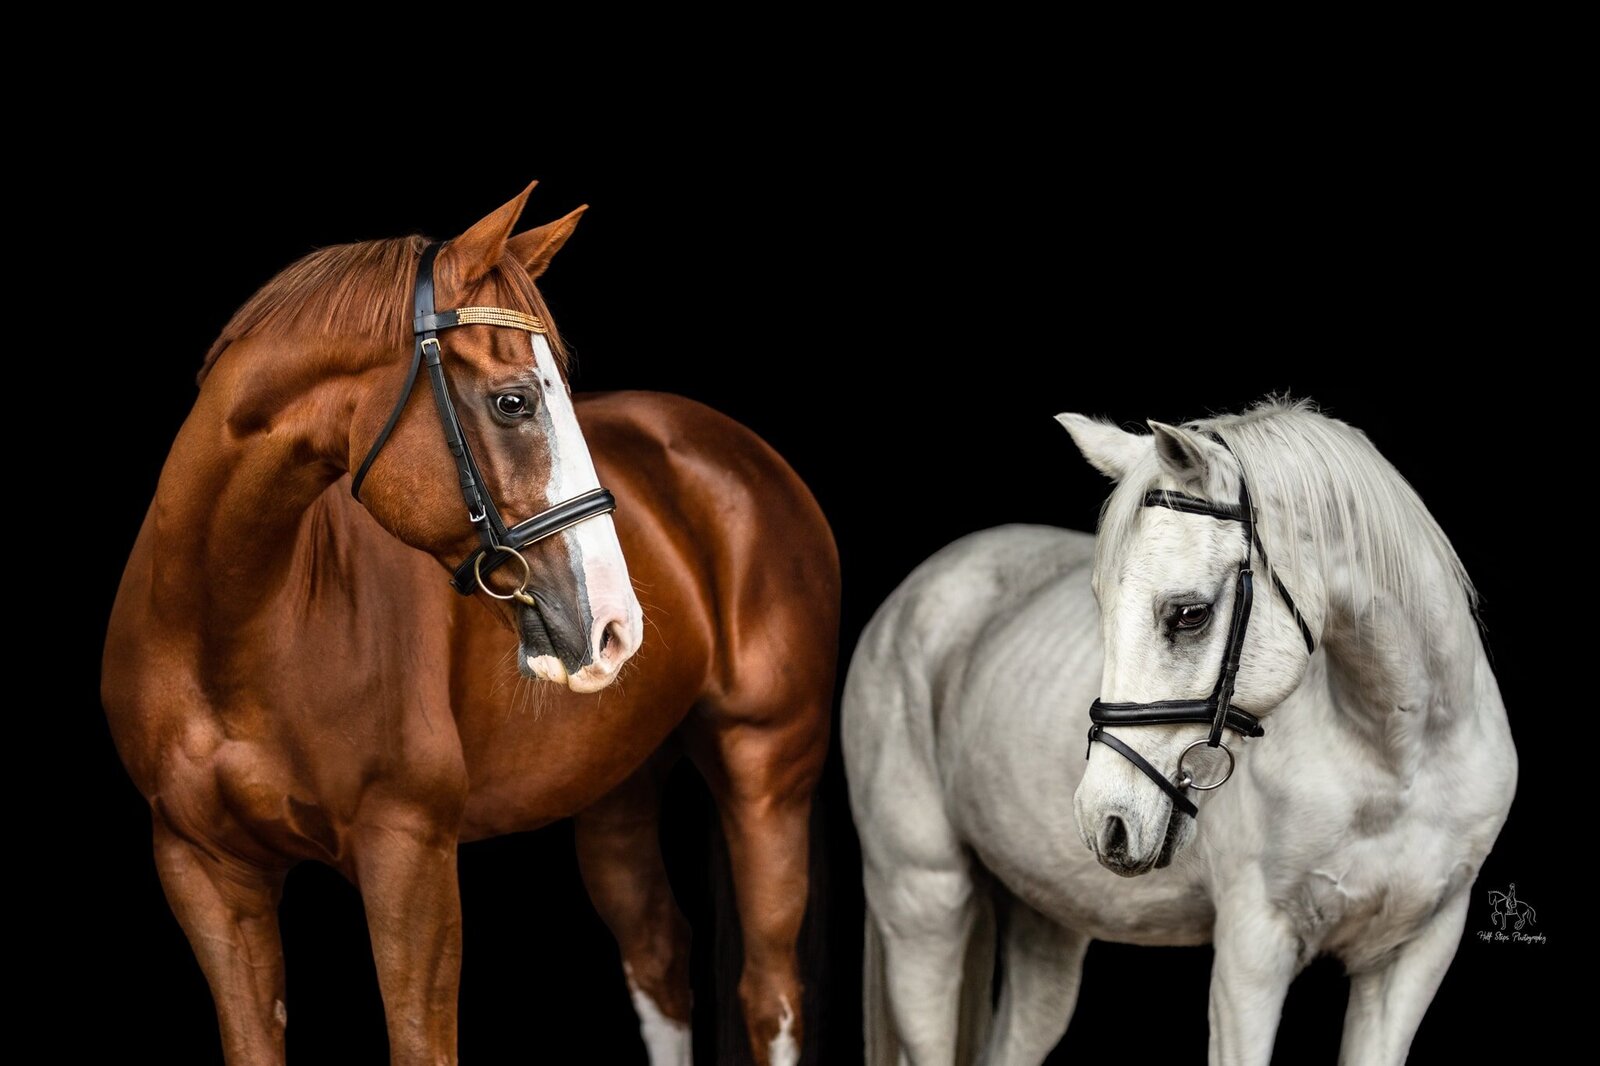 (21) Two horses, one senior horse against black background 